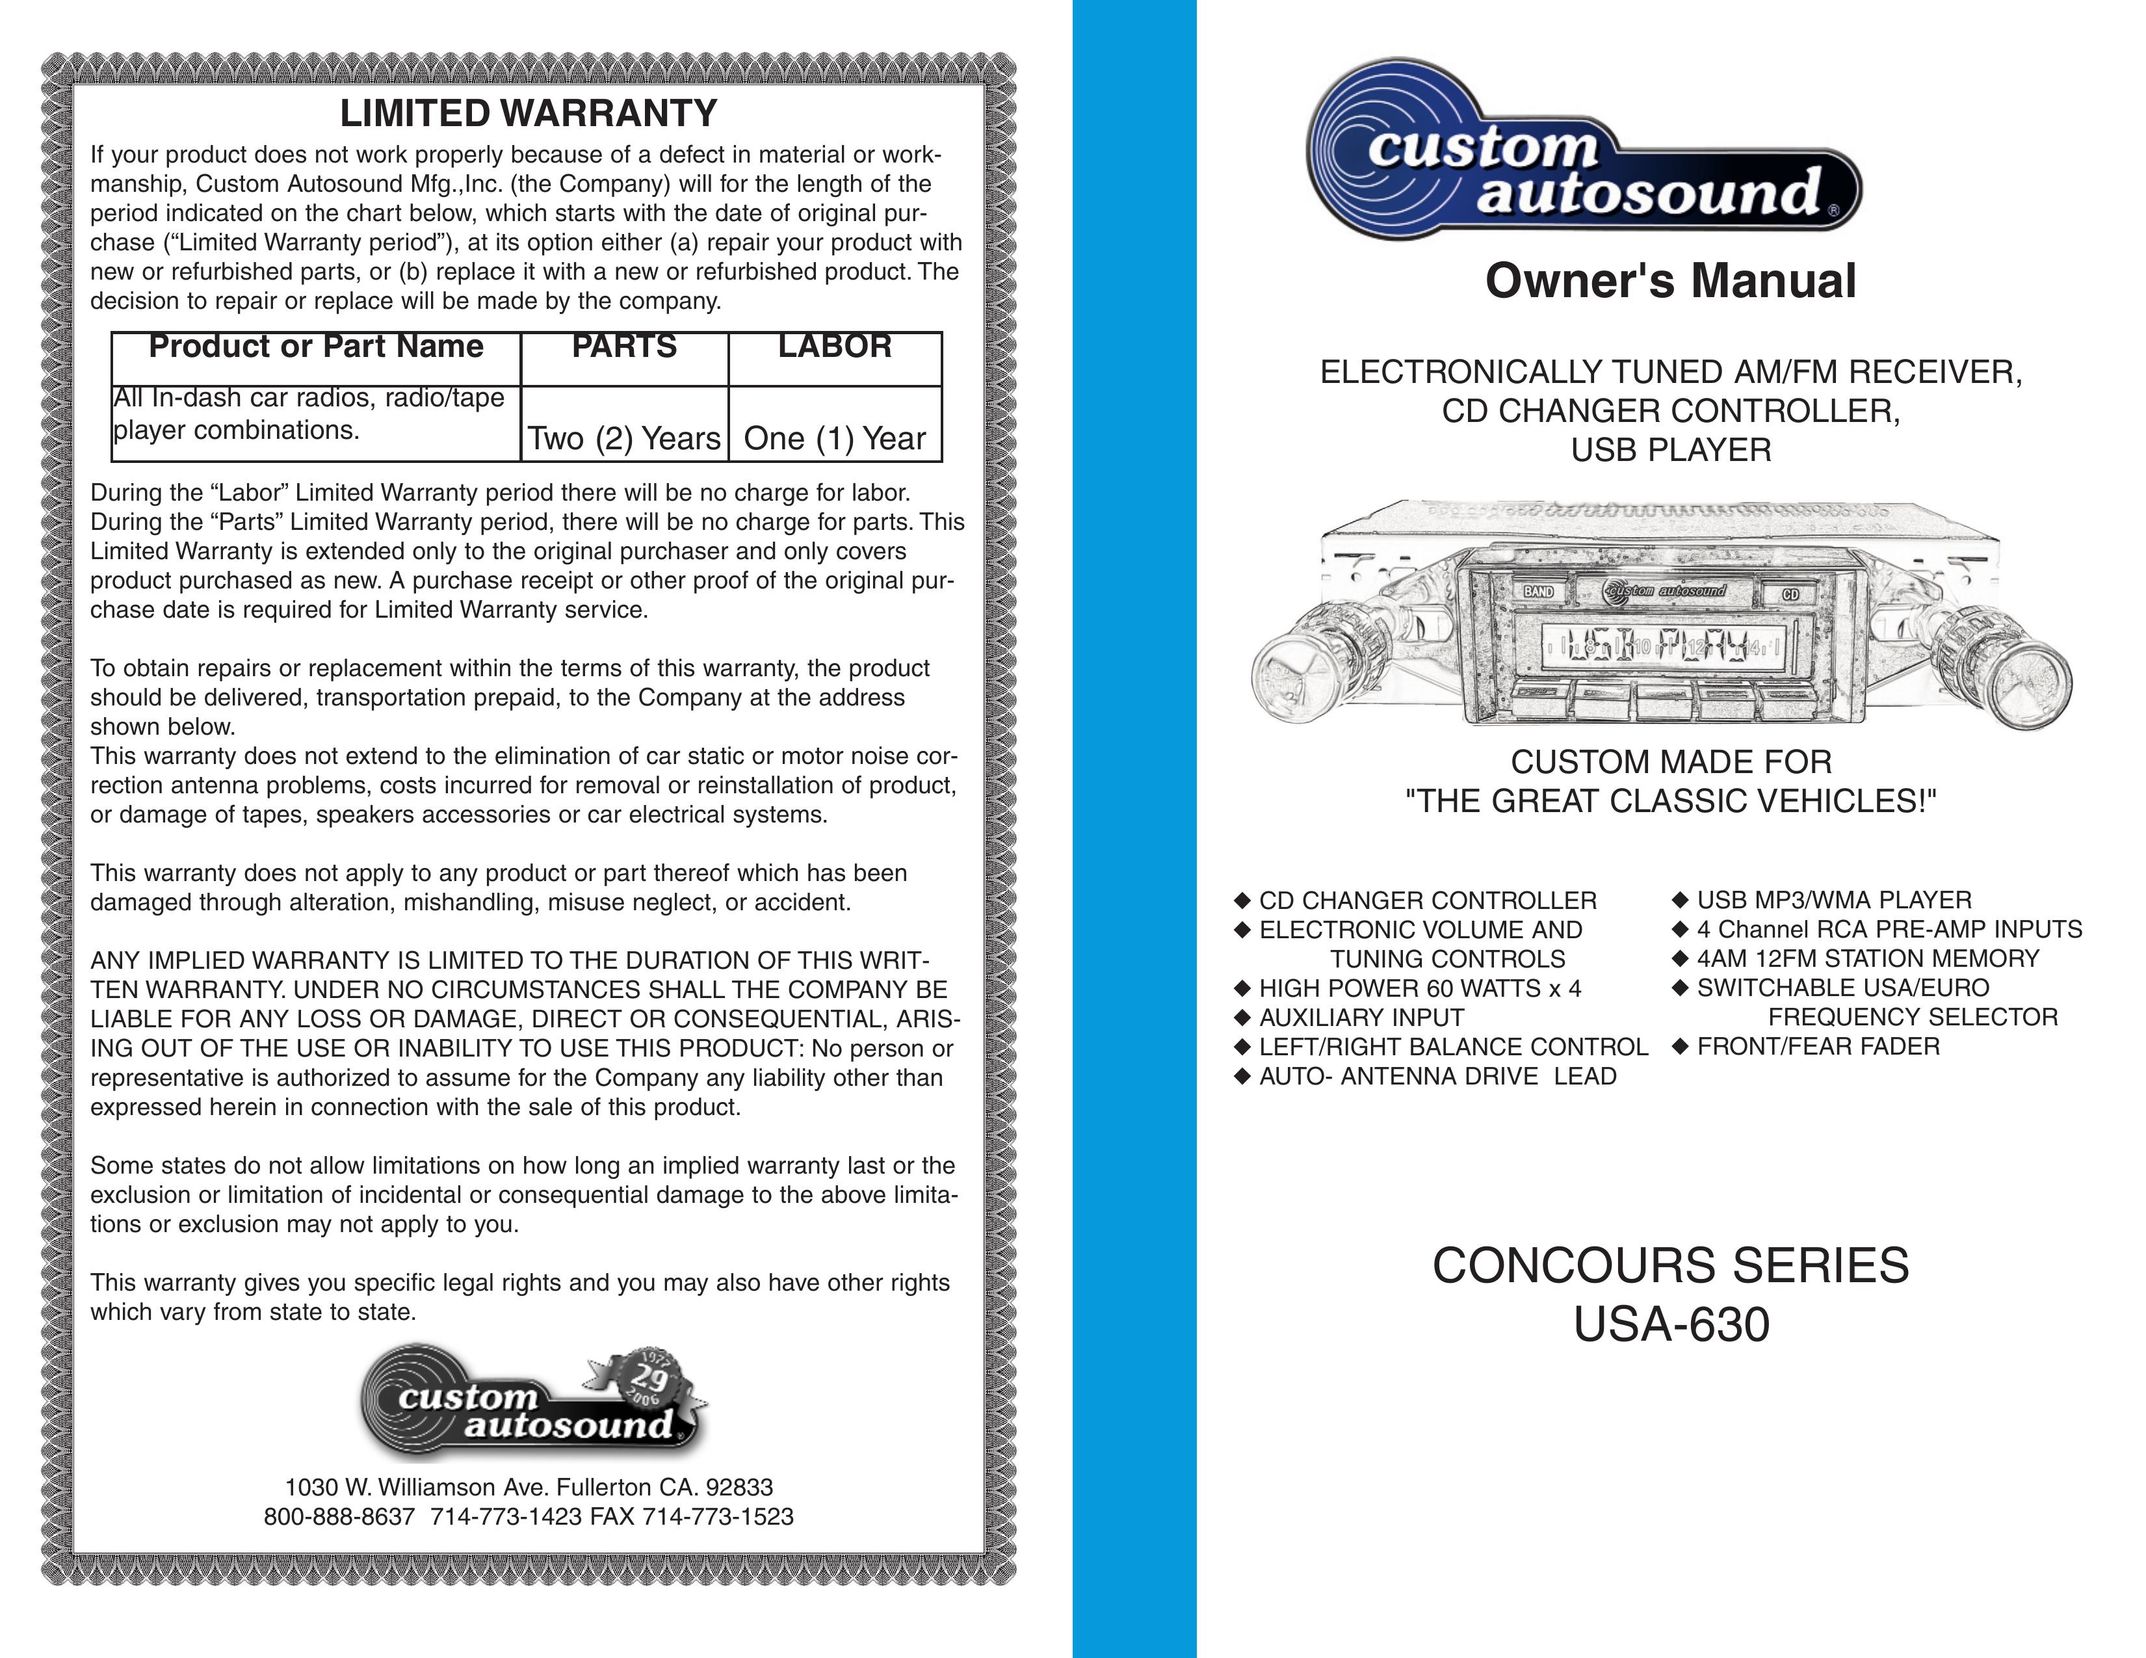 Custom Autosound Manufacturing USA-630 Satellite TV System User Manual